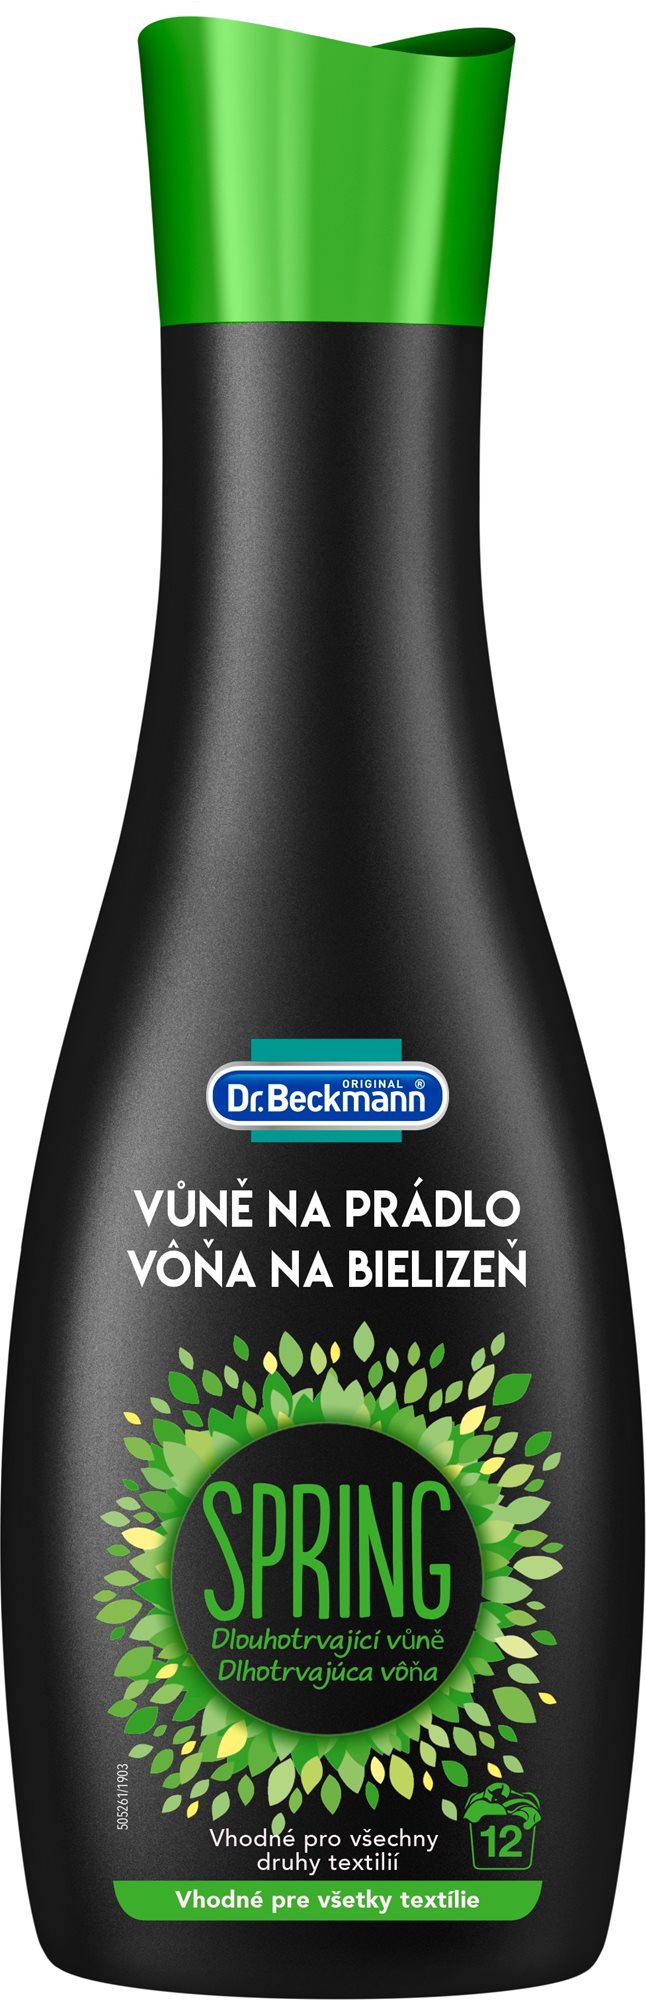 DR. BECKMANN Spring 250 ml